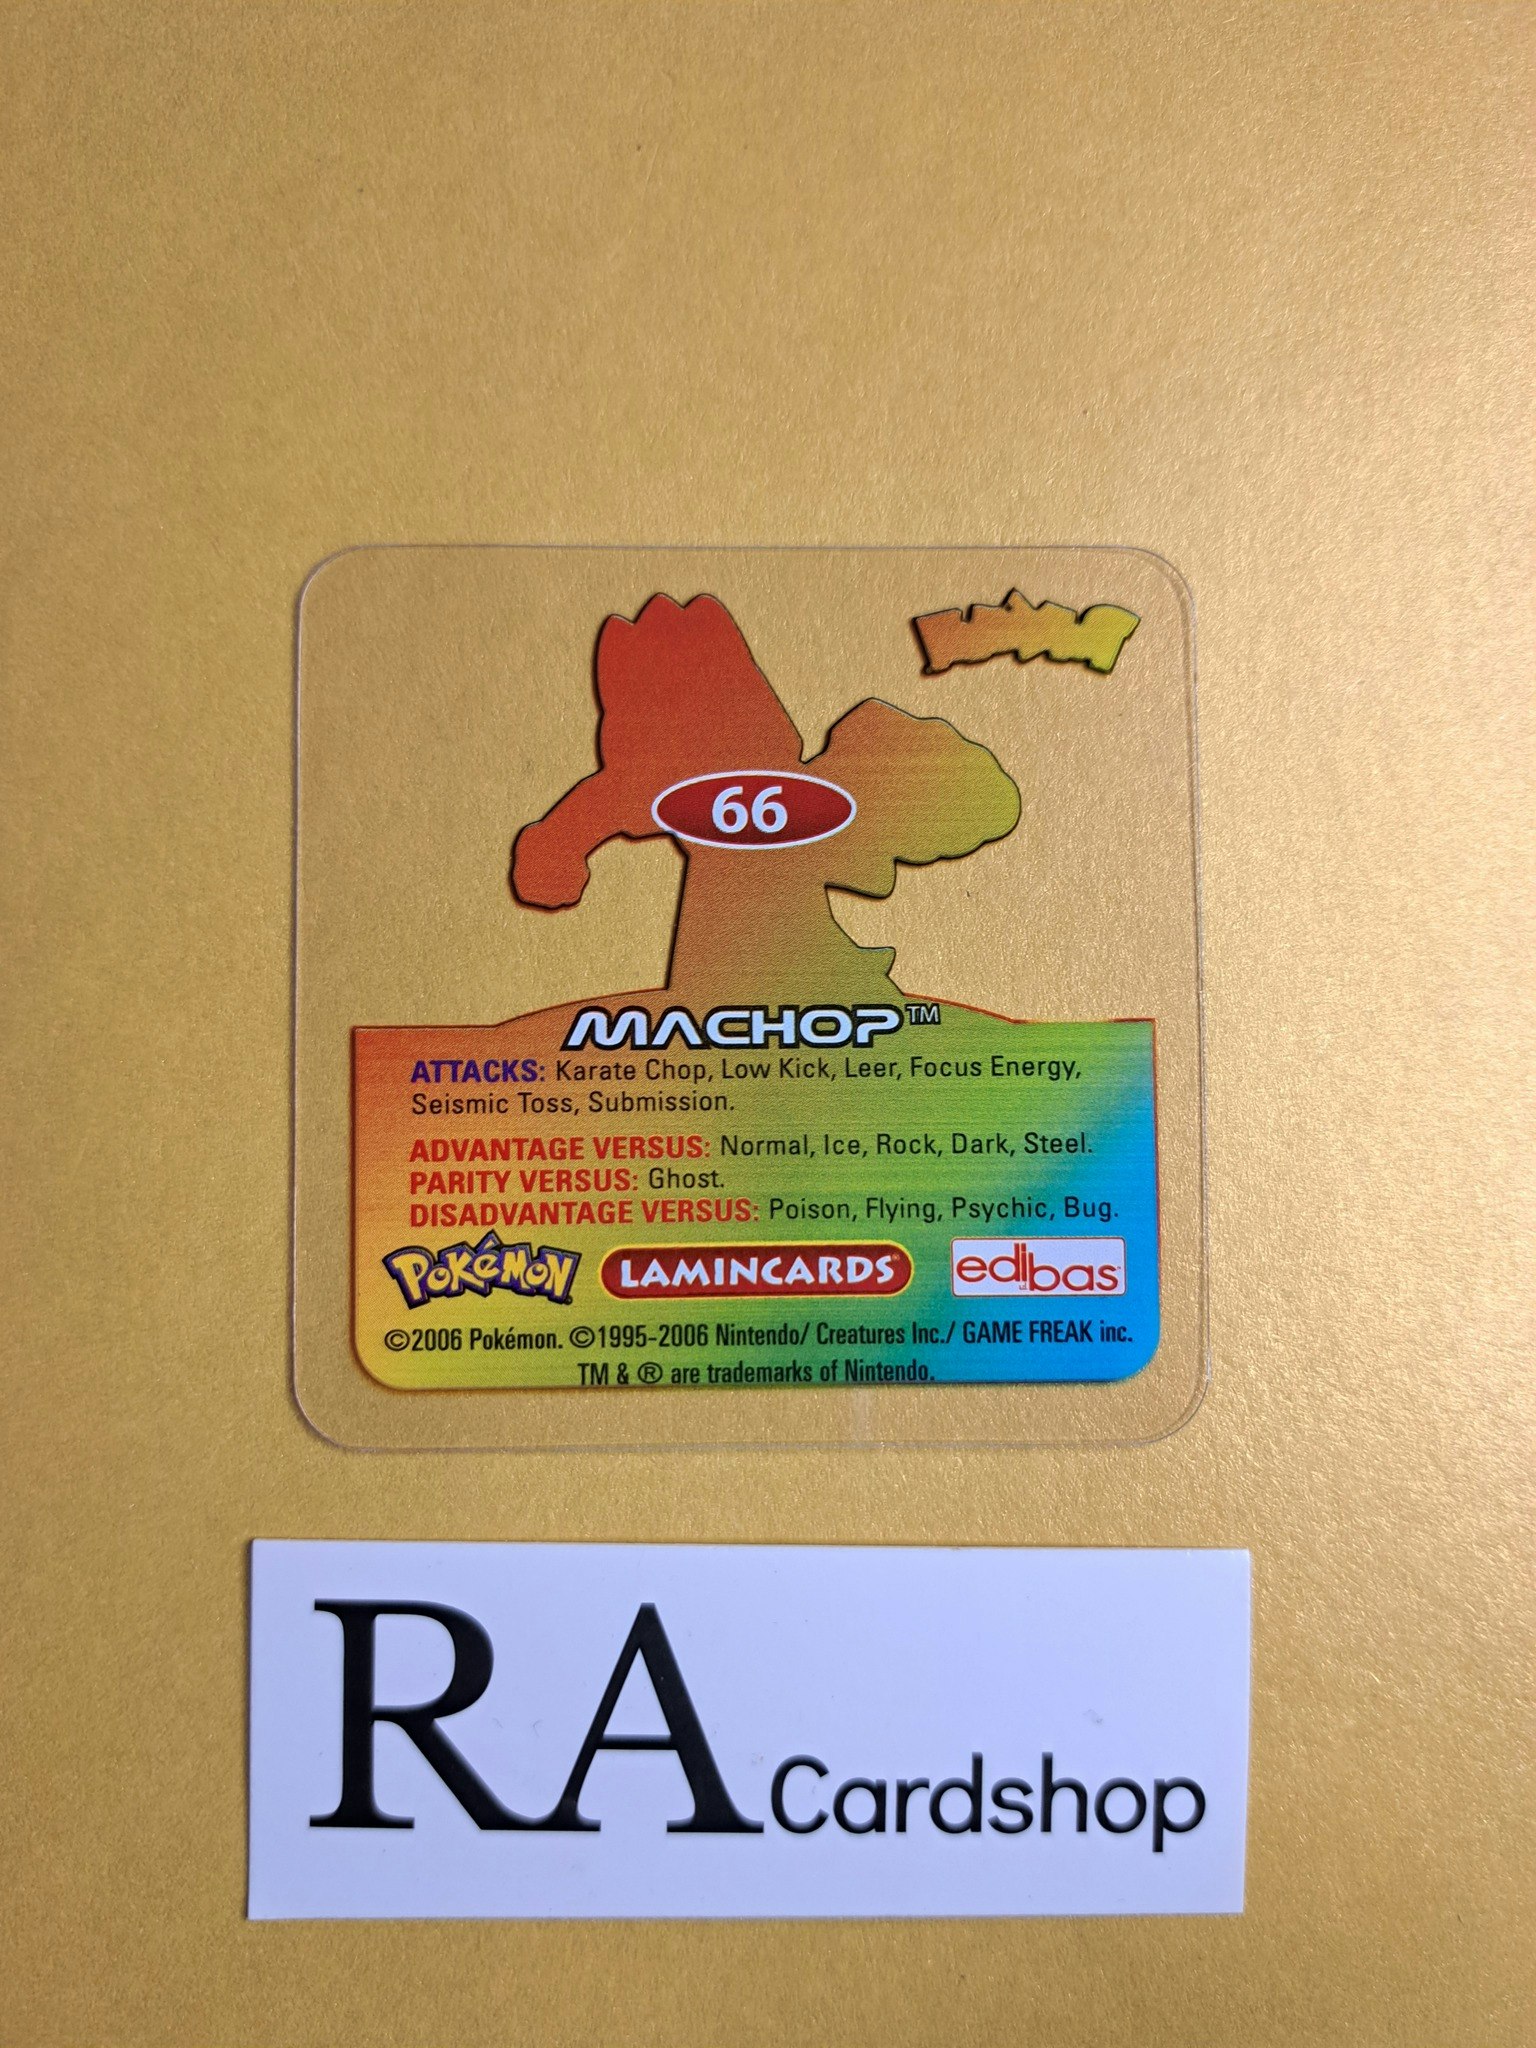 Machop #66 Edibas Lamincard Pokemon